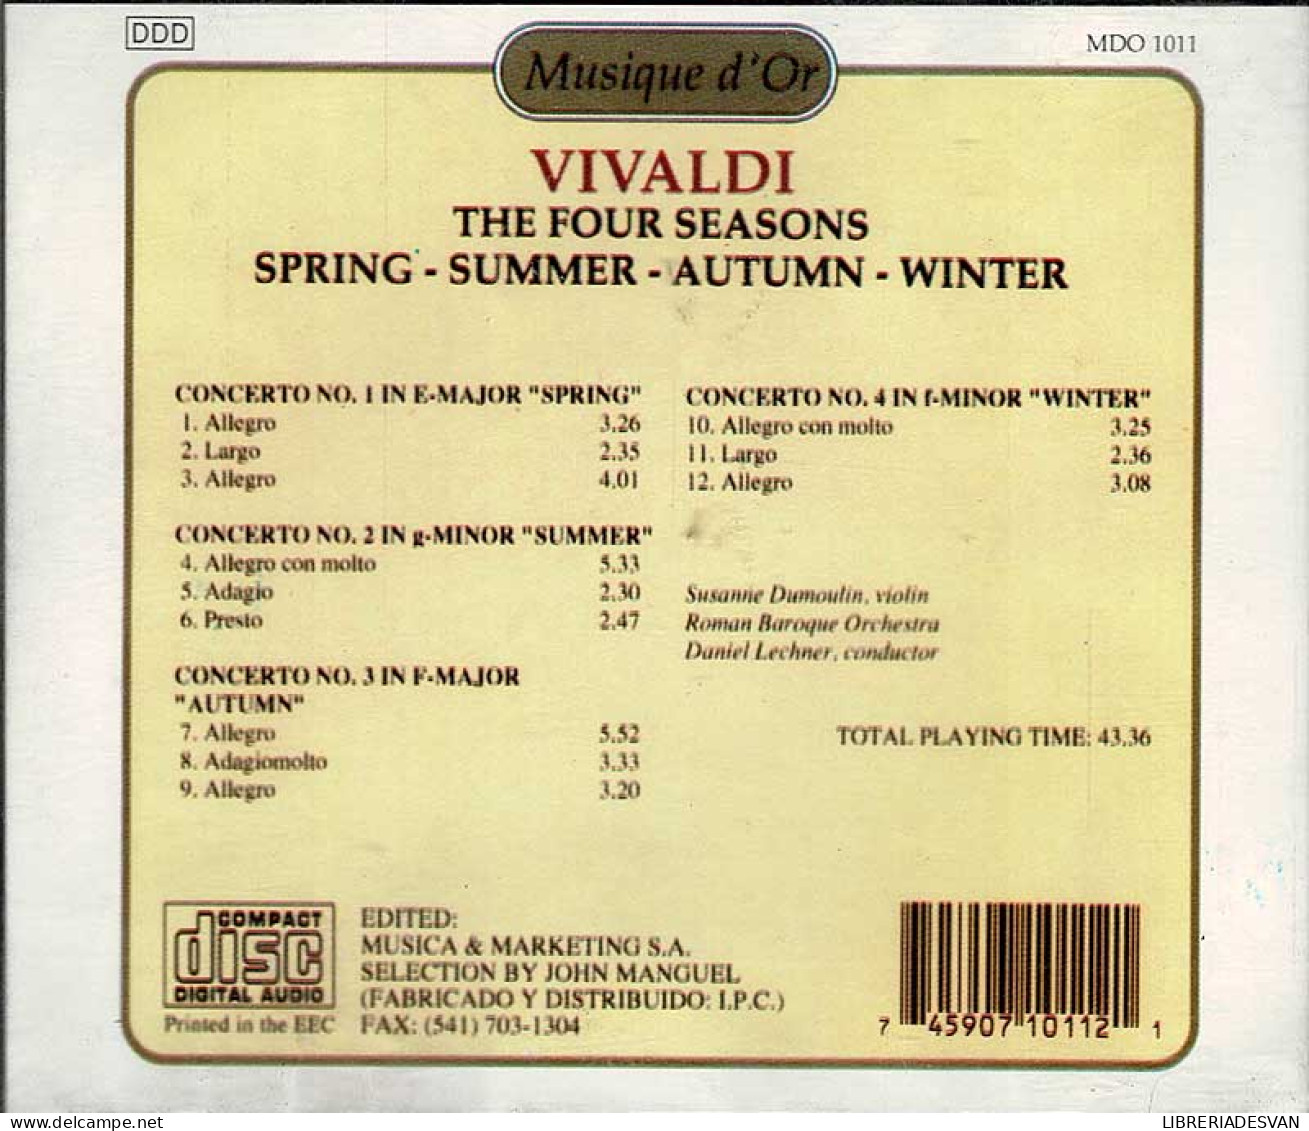 Vivaldi - The Four Seasons. CD - Classique